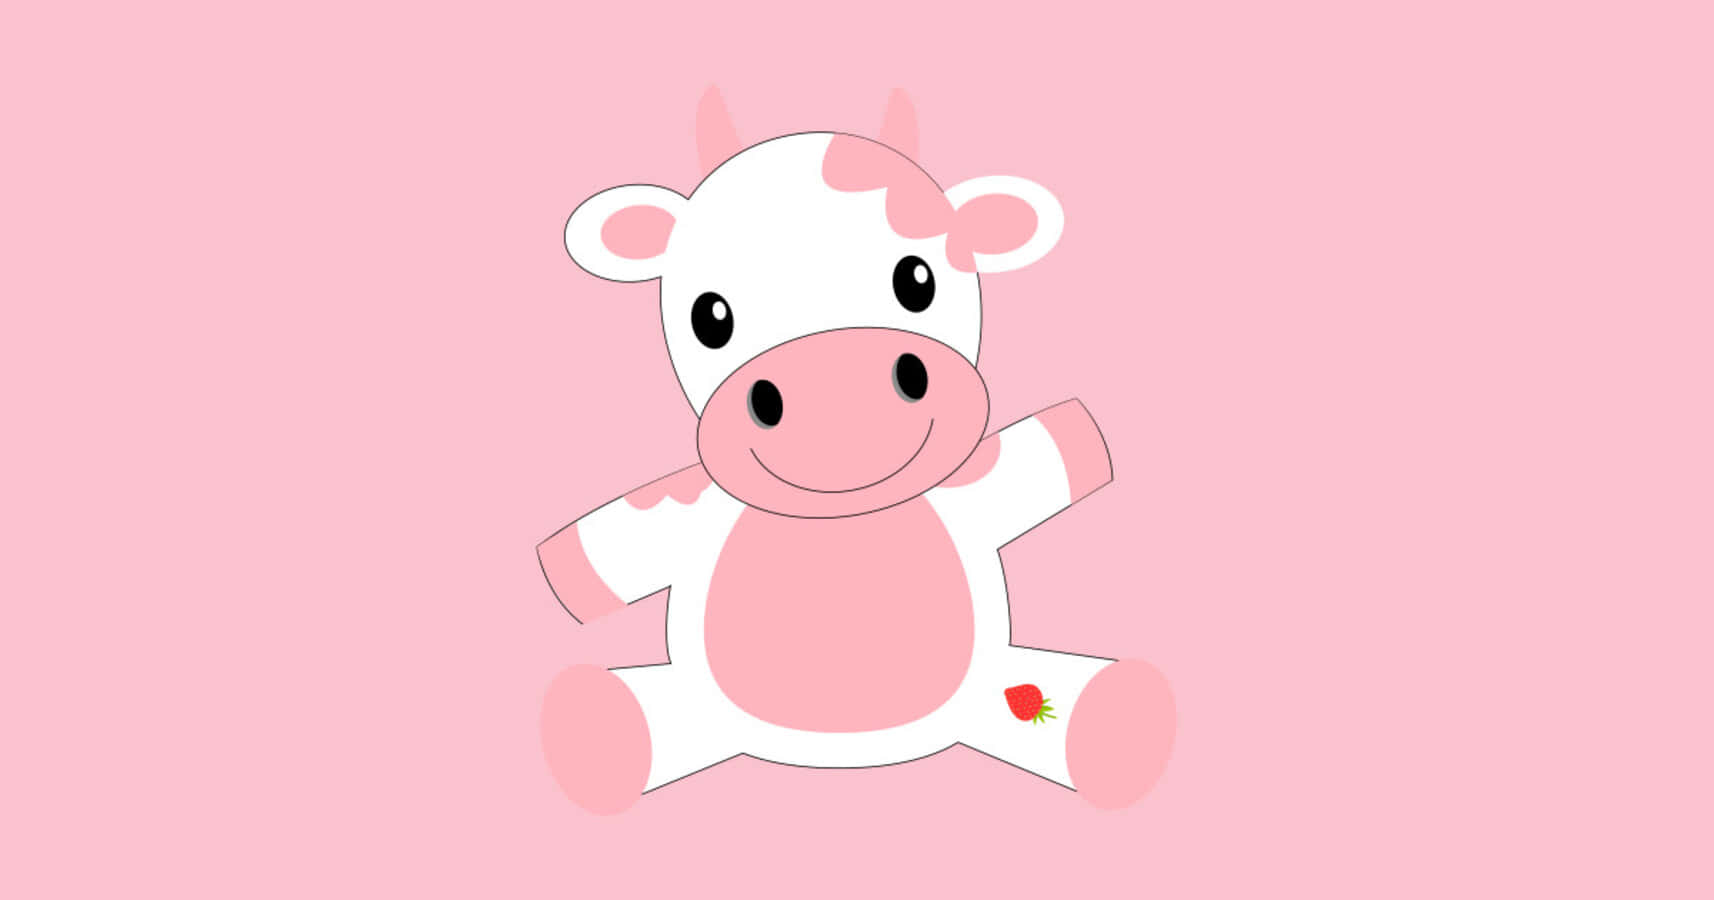 Adorable Kawaii Strawberry Cow illustration Wallpaper